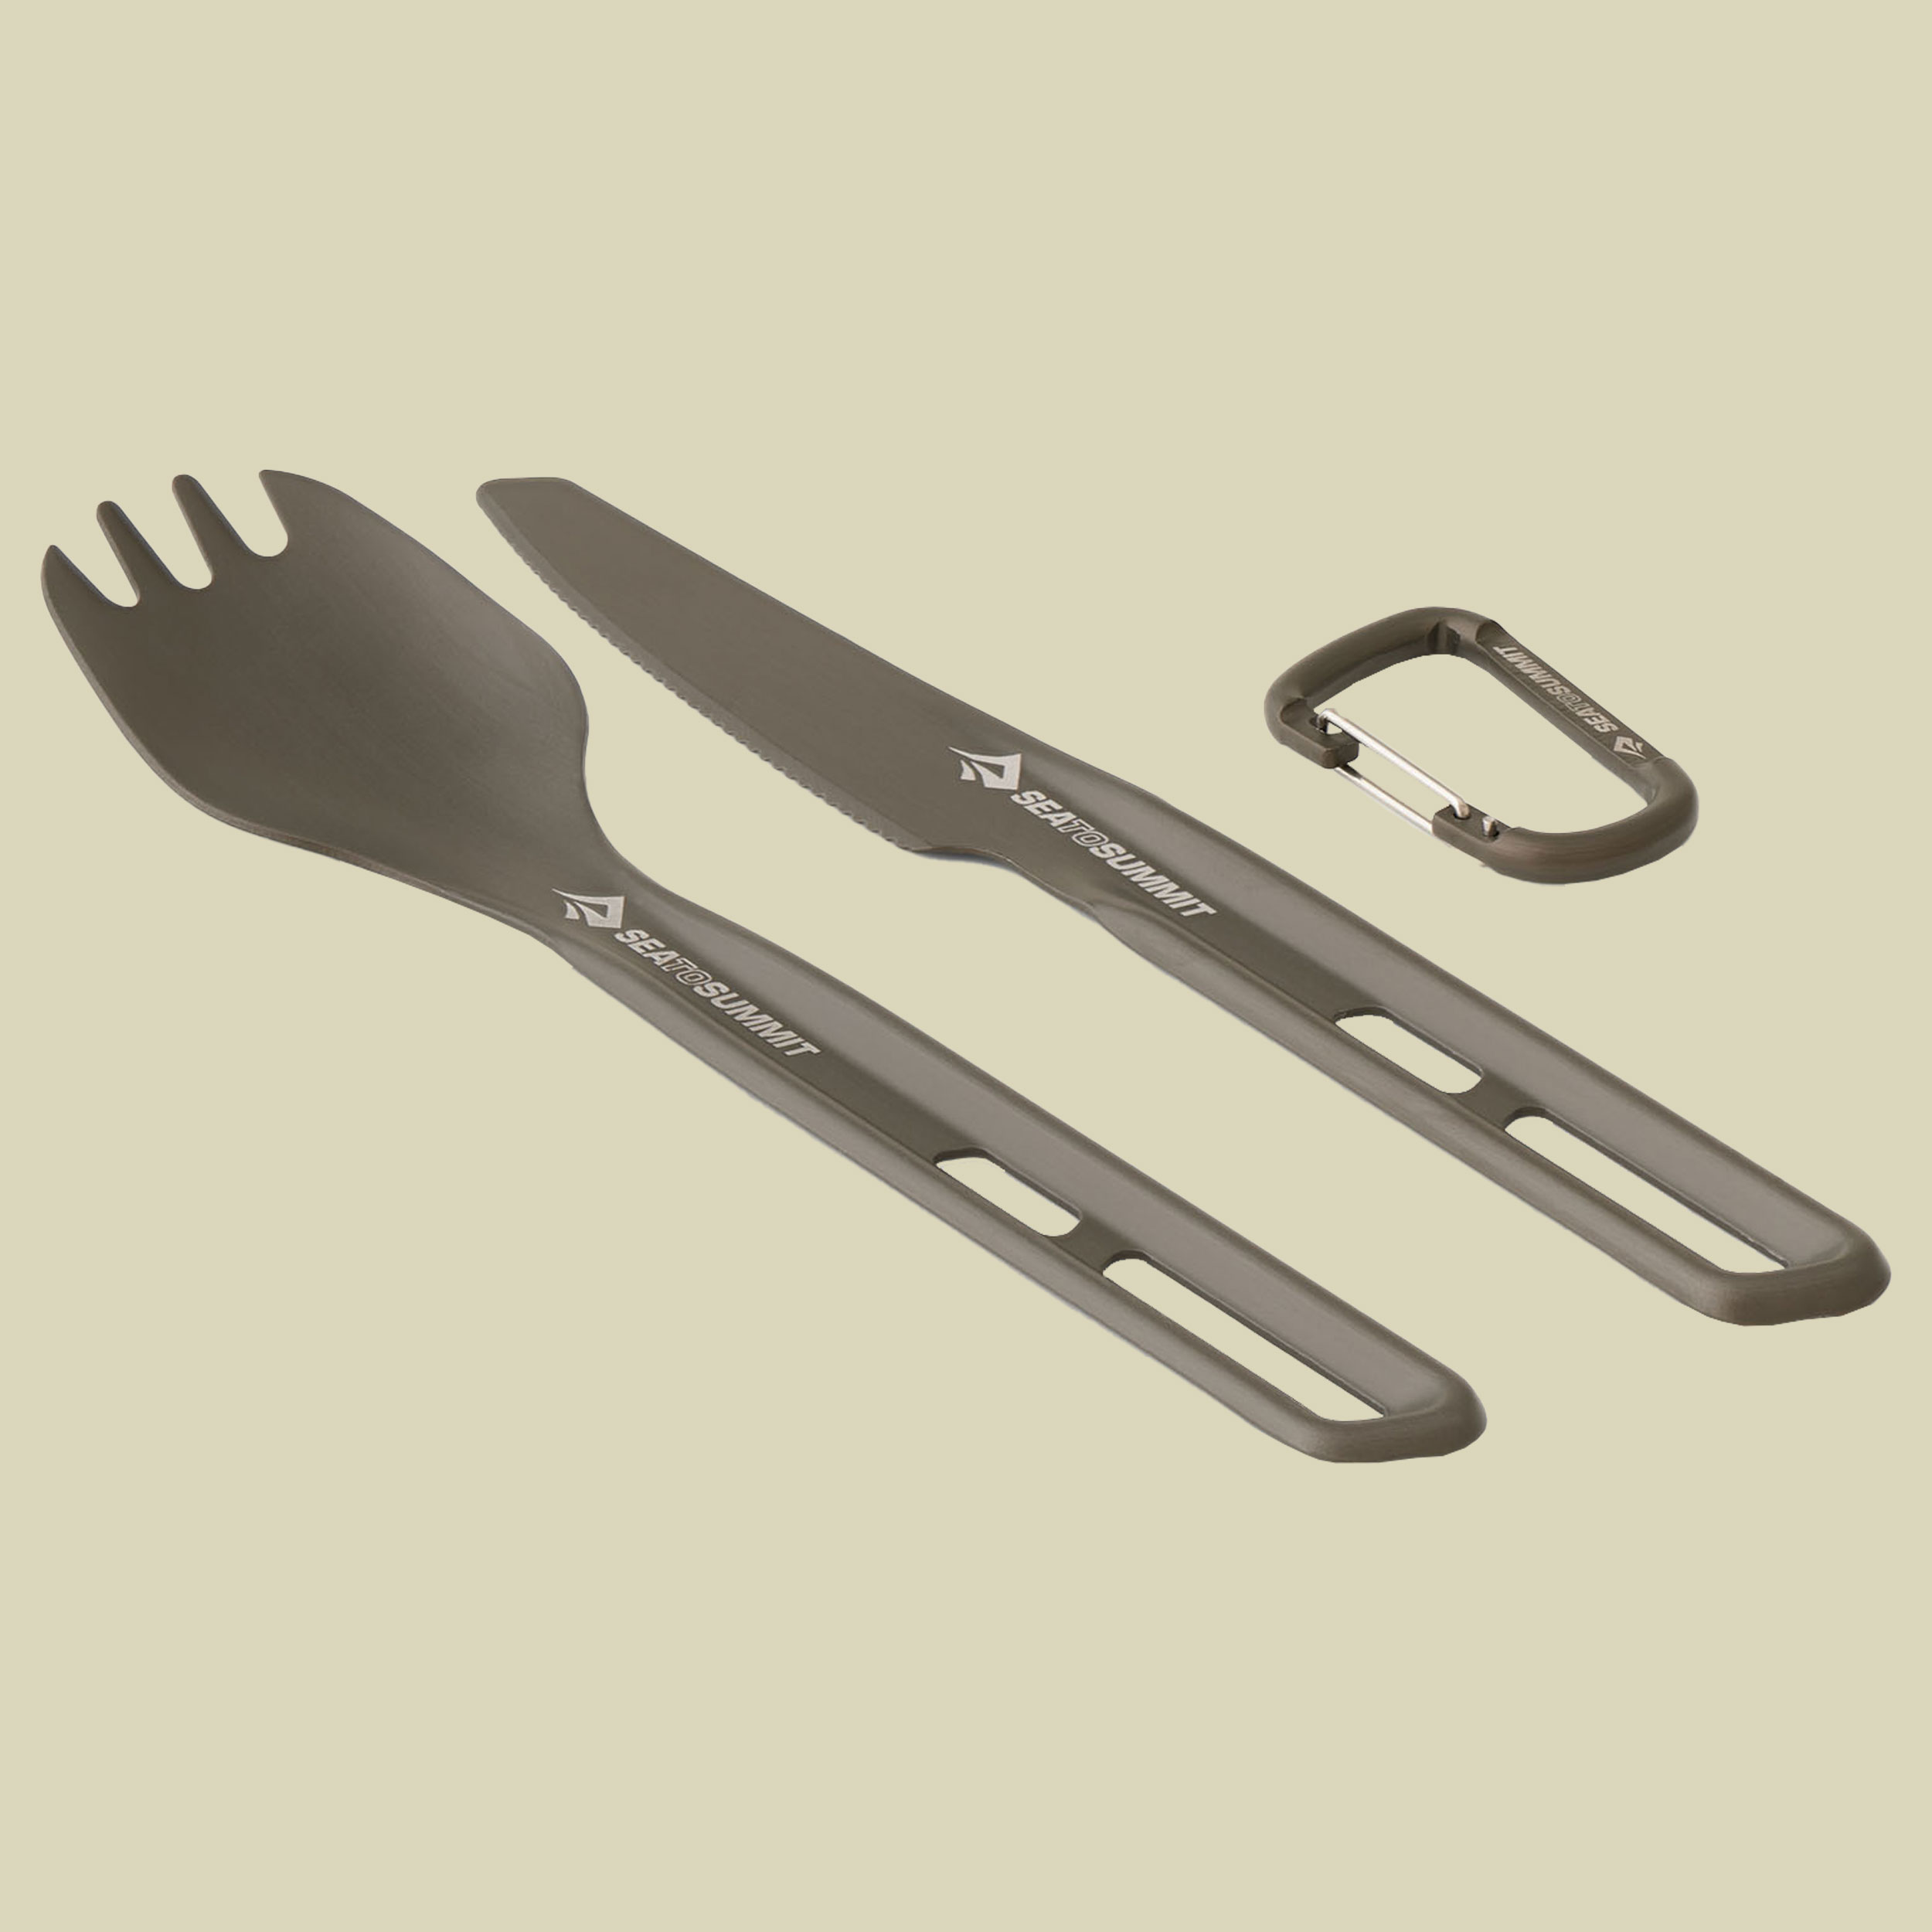 Frontier UL Cutlery Set - [2 Piece] Spork and Knife grau - aluminium hard anodised grey